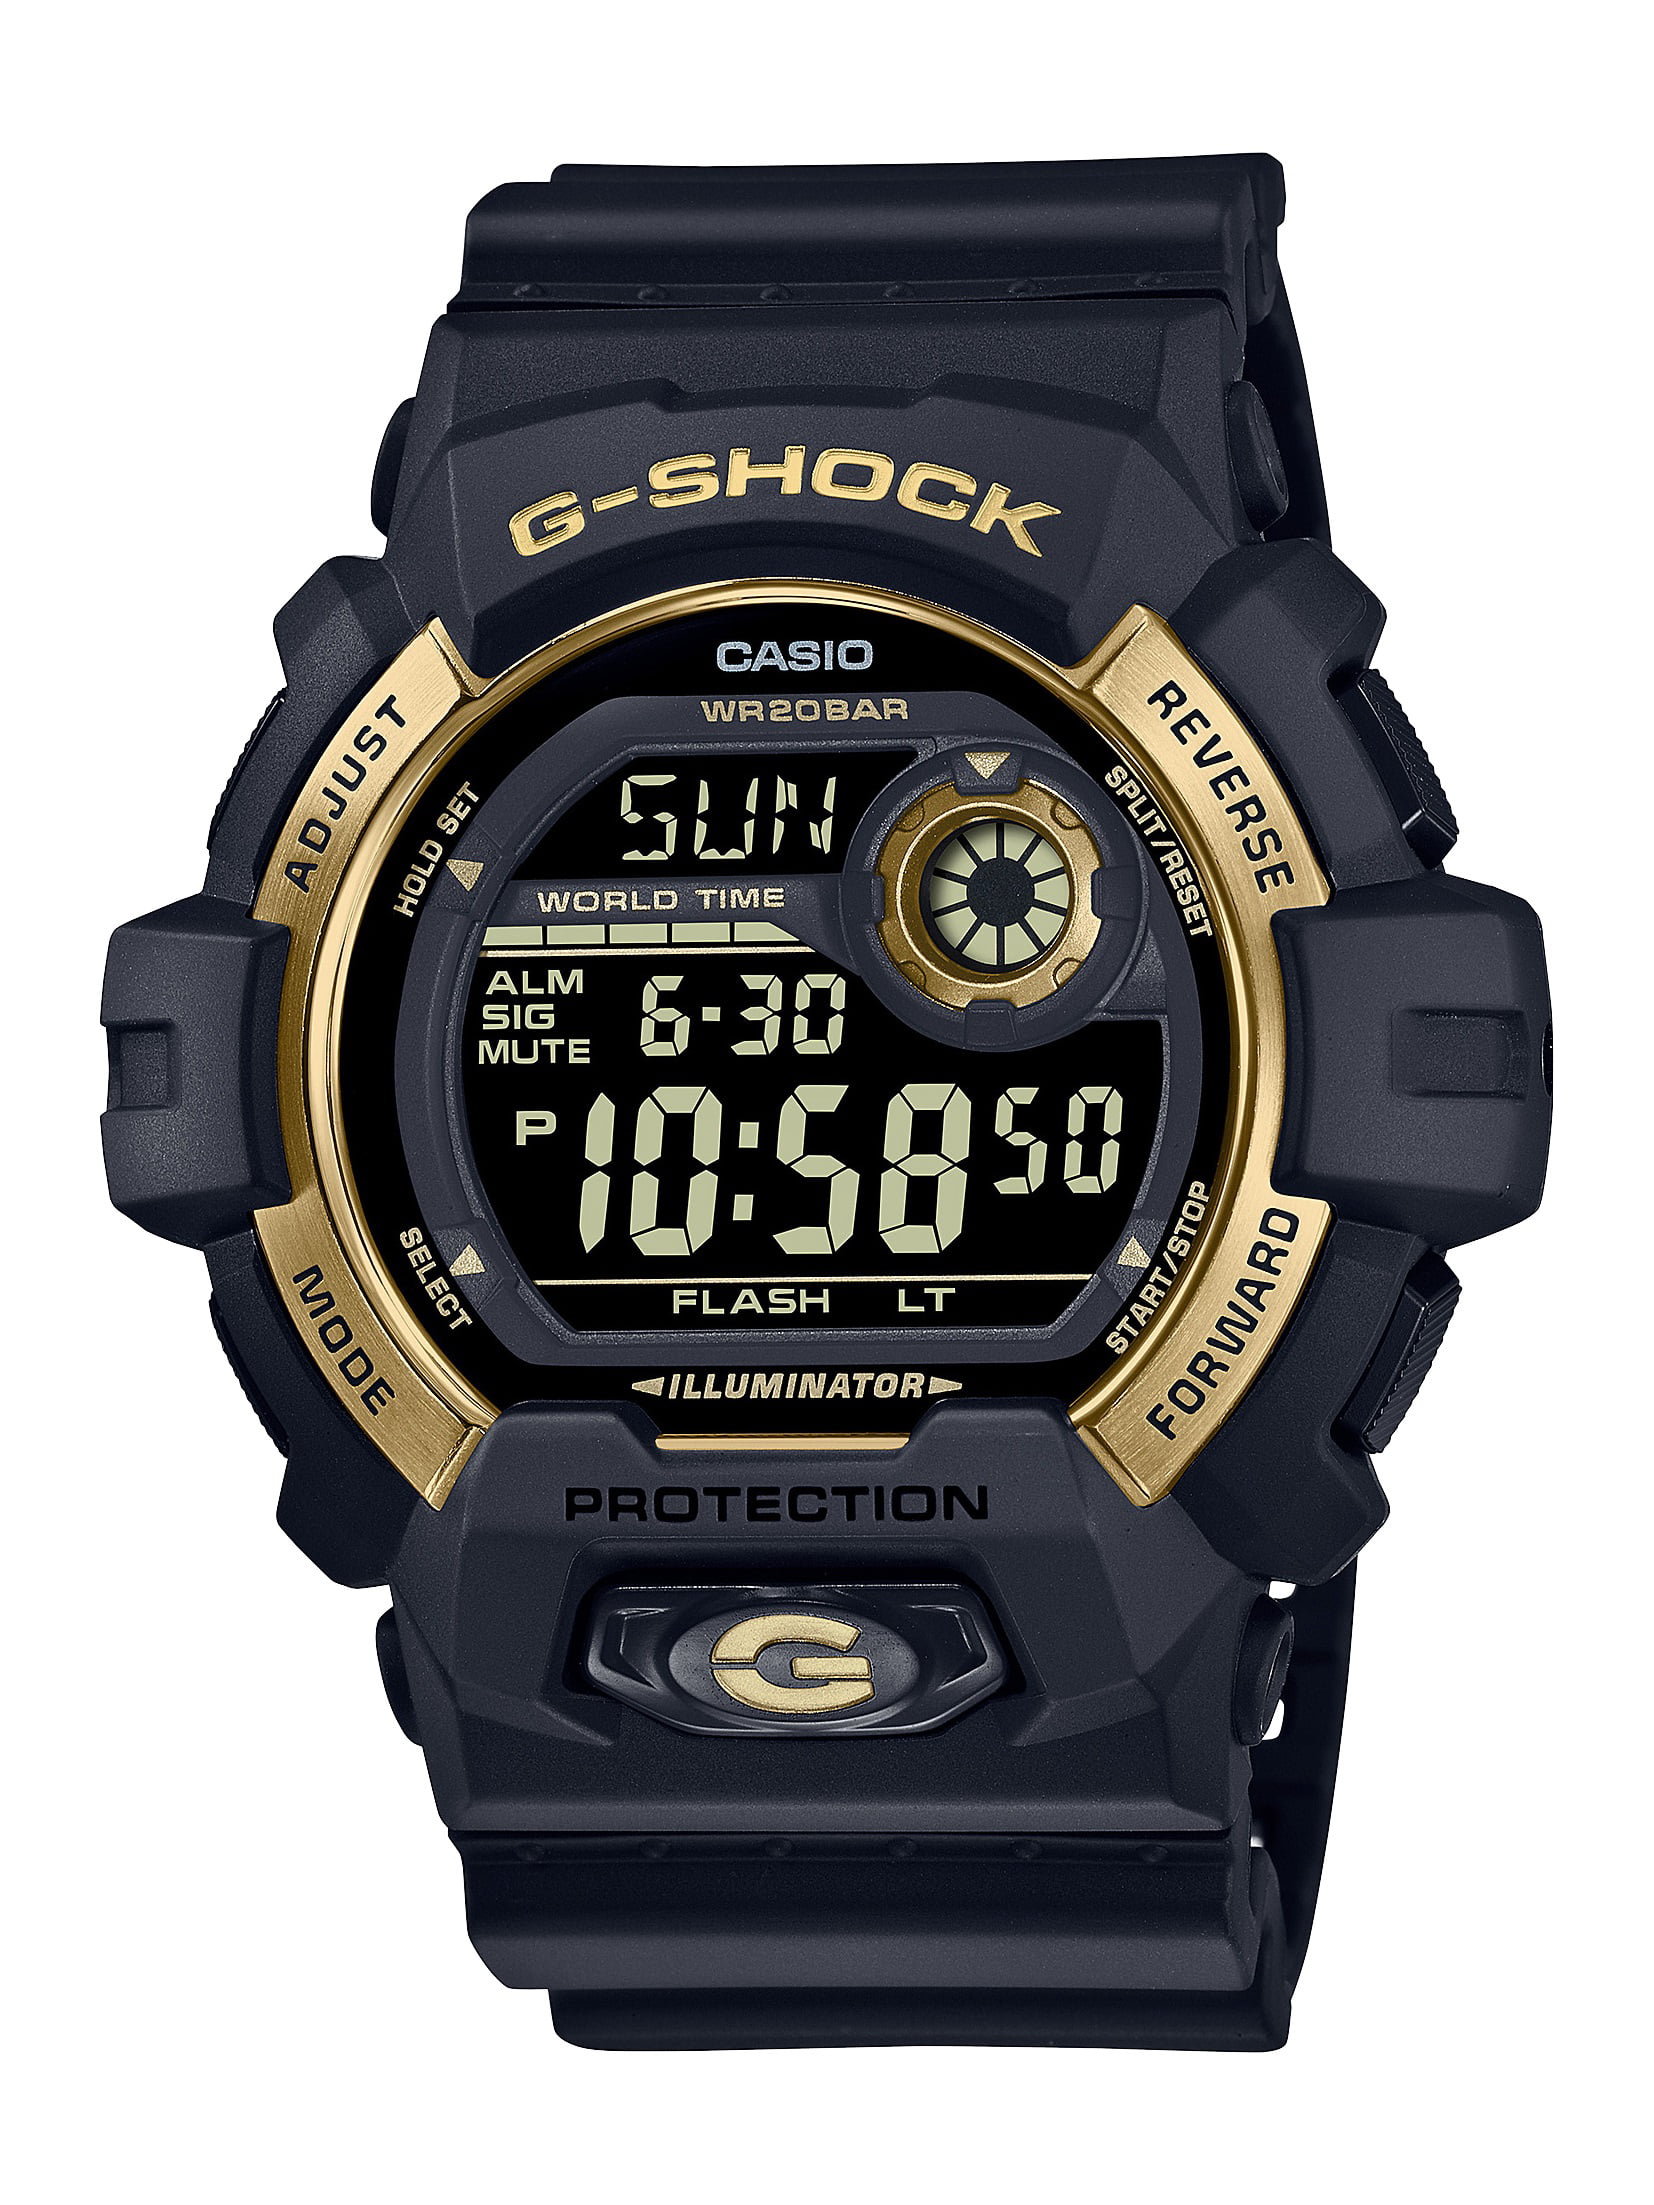 Casio Men's G-Shock Digital Sport Watch, Black/Gold G8900GB-1A